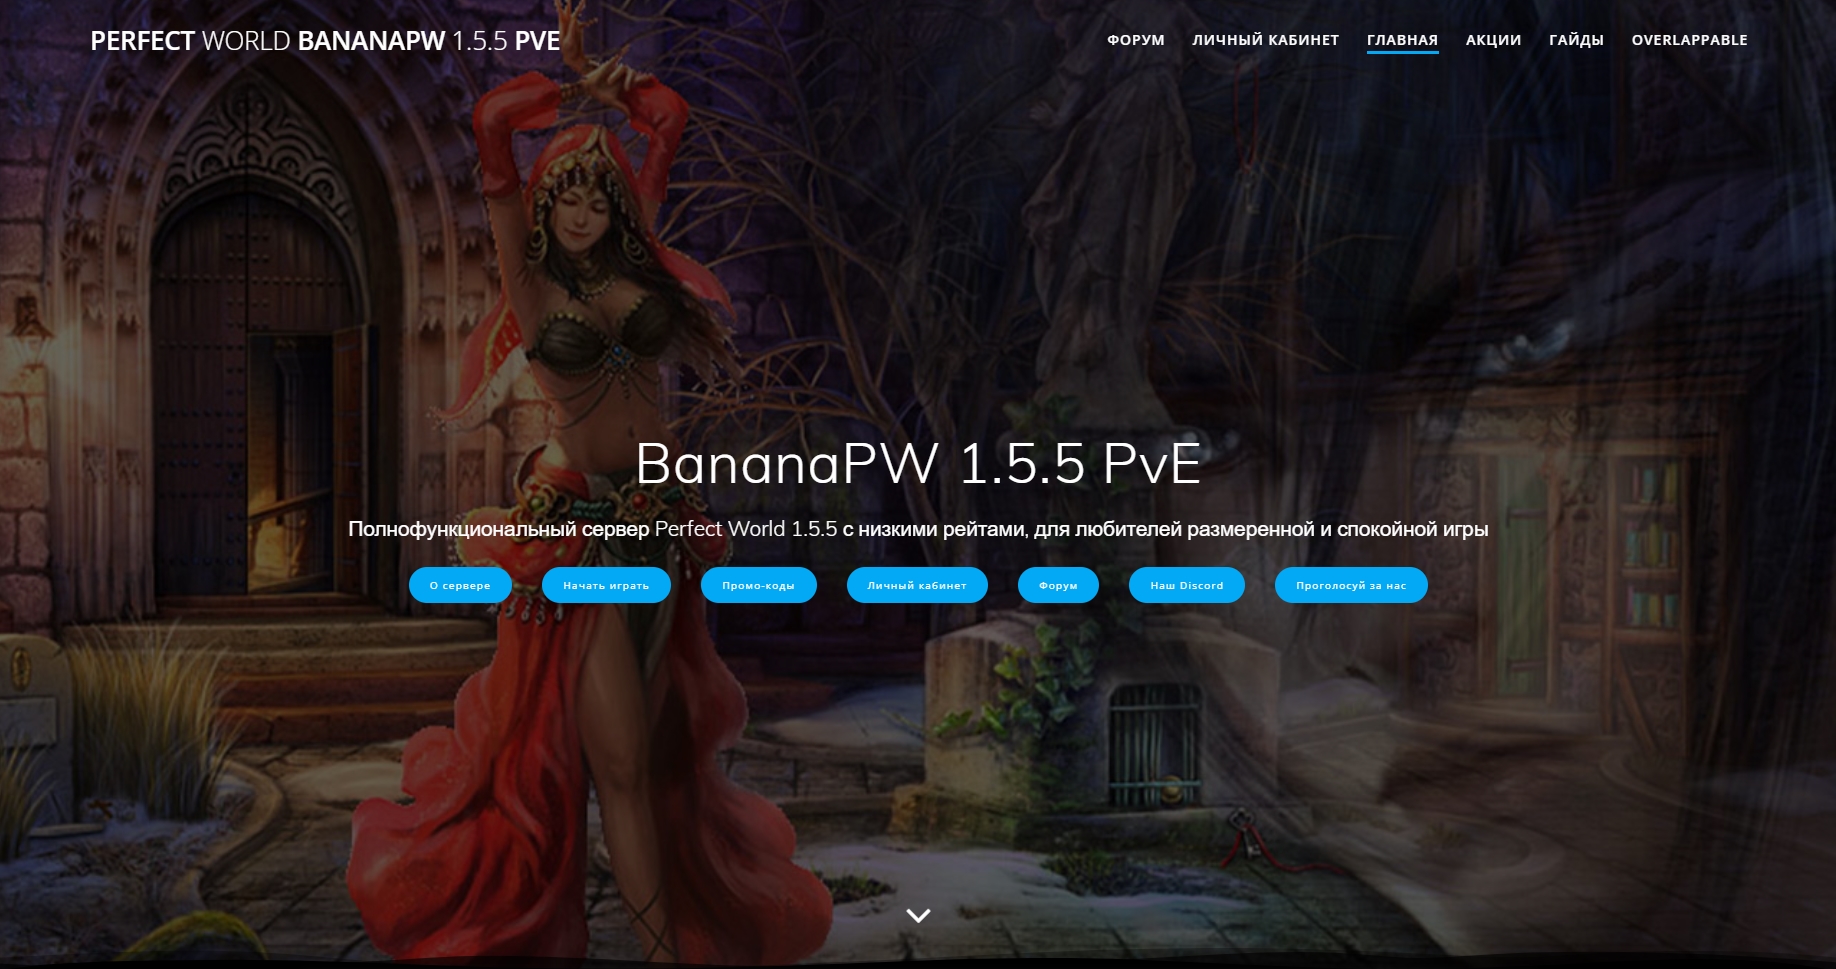 🍌 BananaPW 1.5.5 | Extreme Adventures with x25 Rates! ⚡️